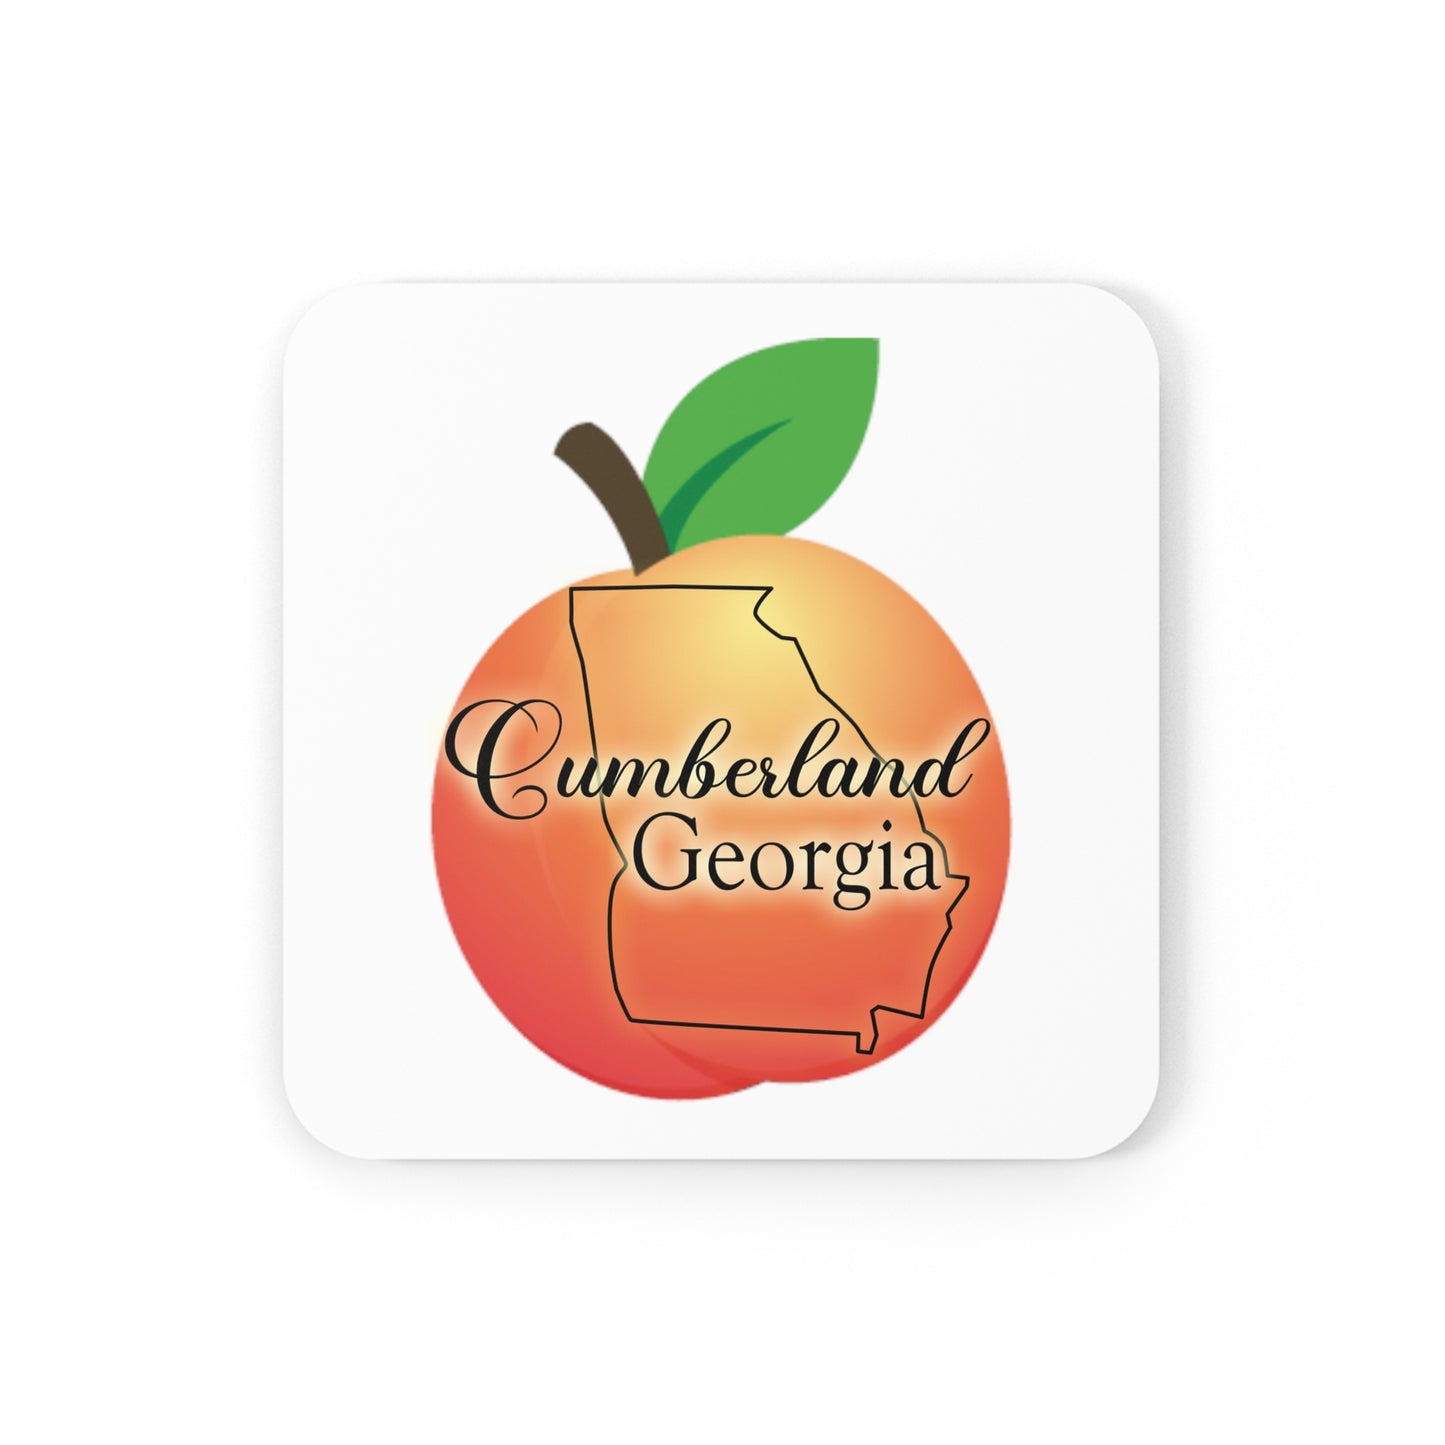 Cumberland Georgia Corkwood Coaster Set